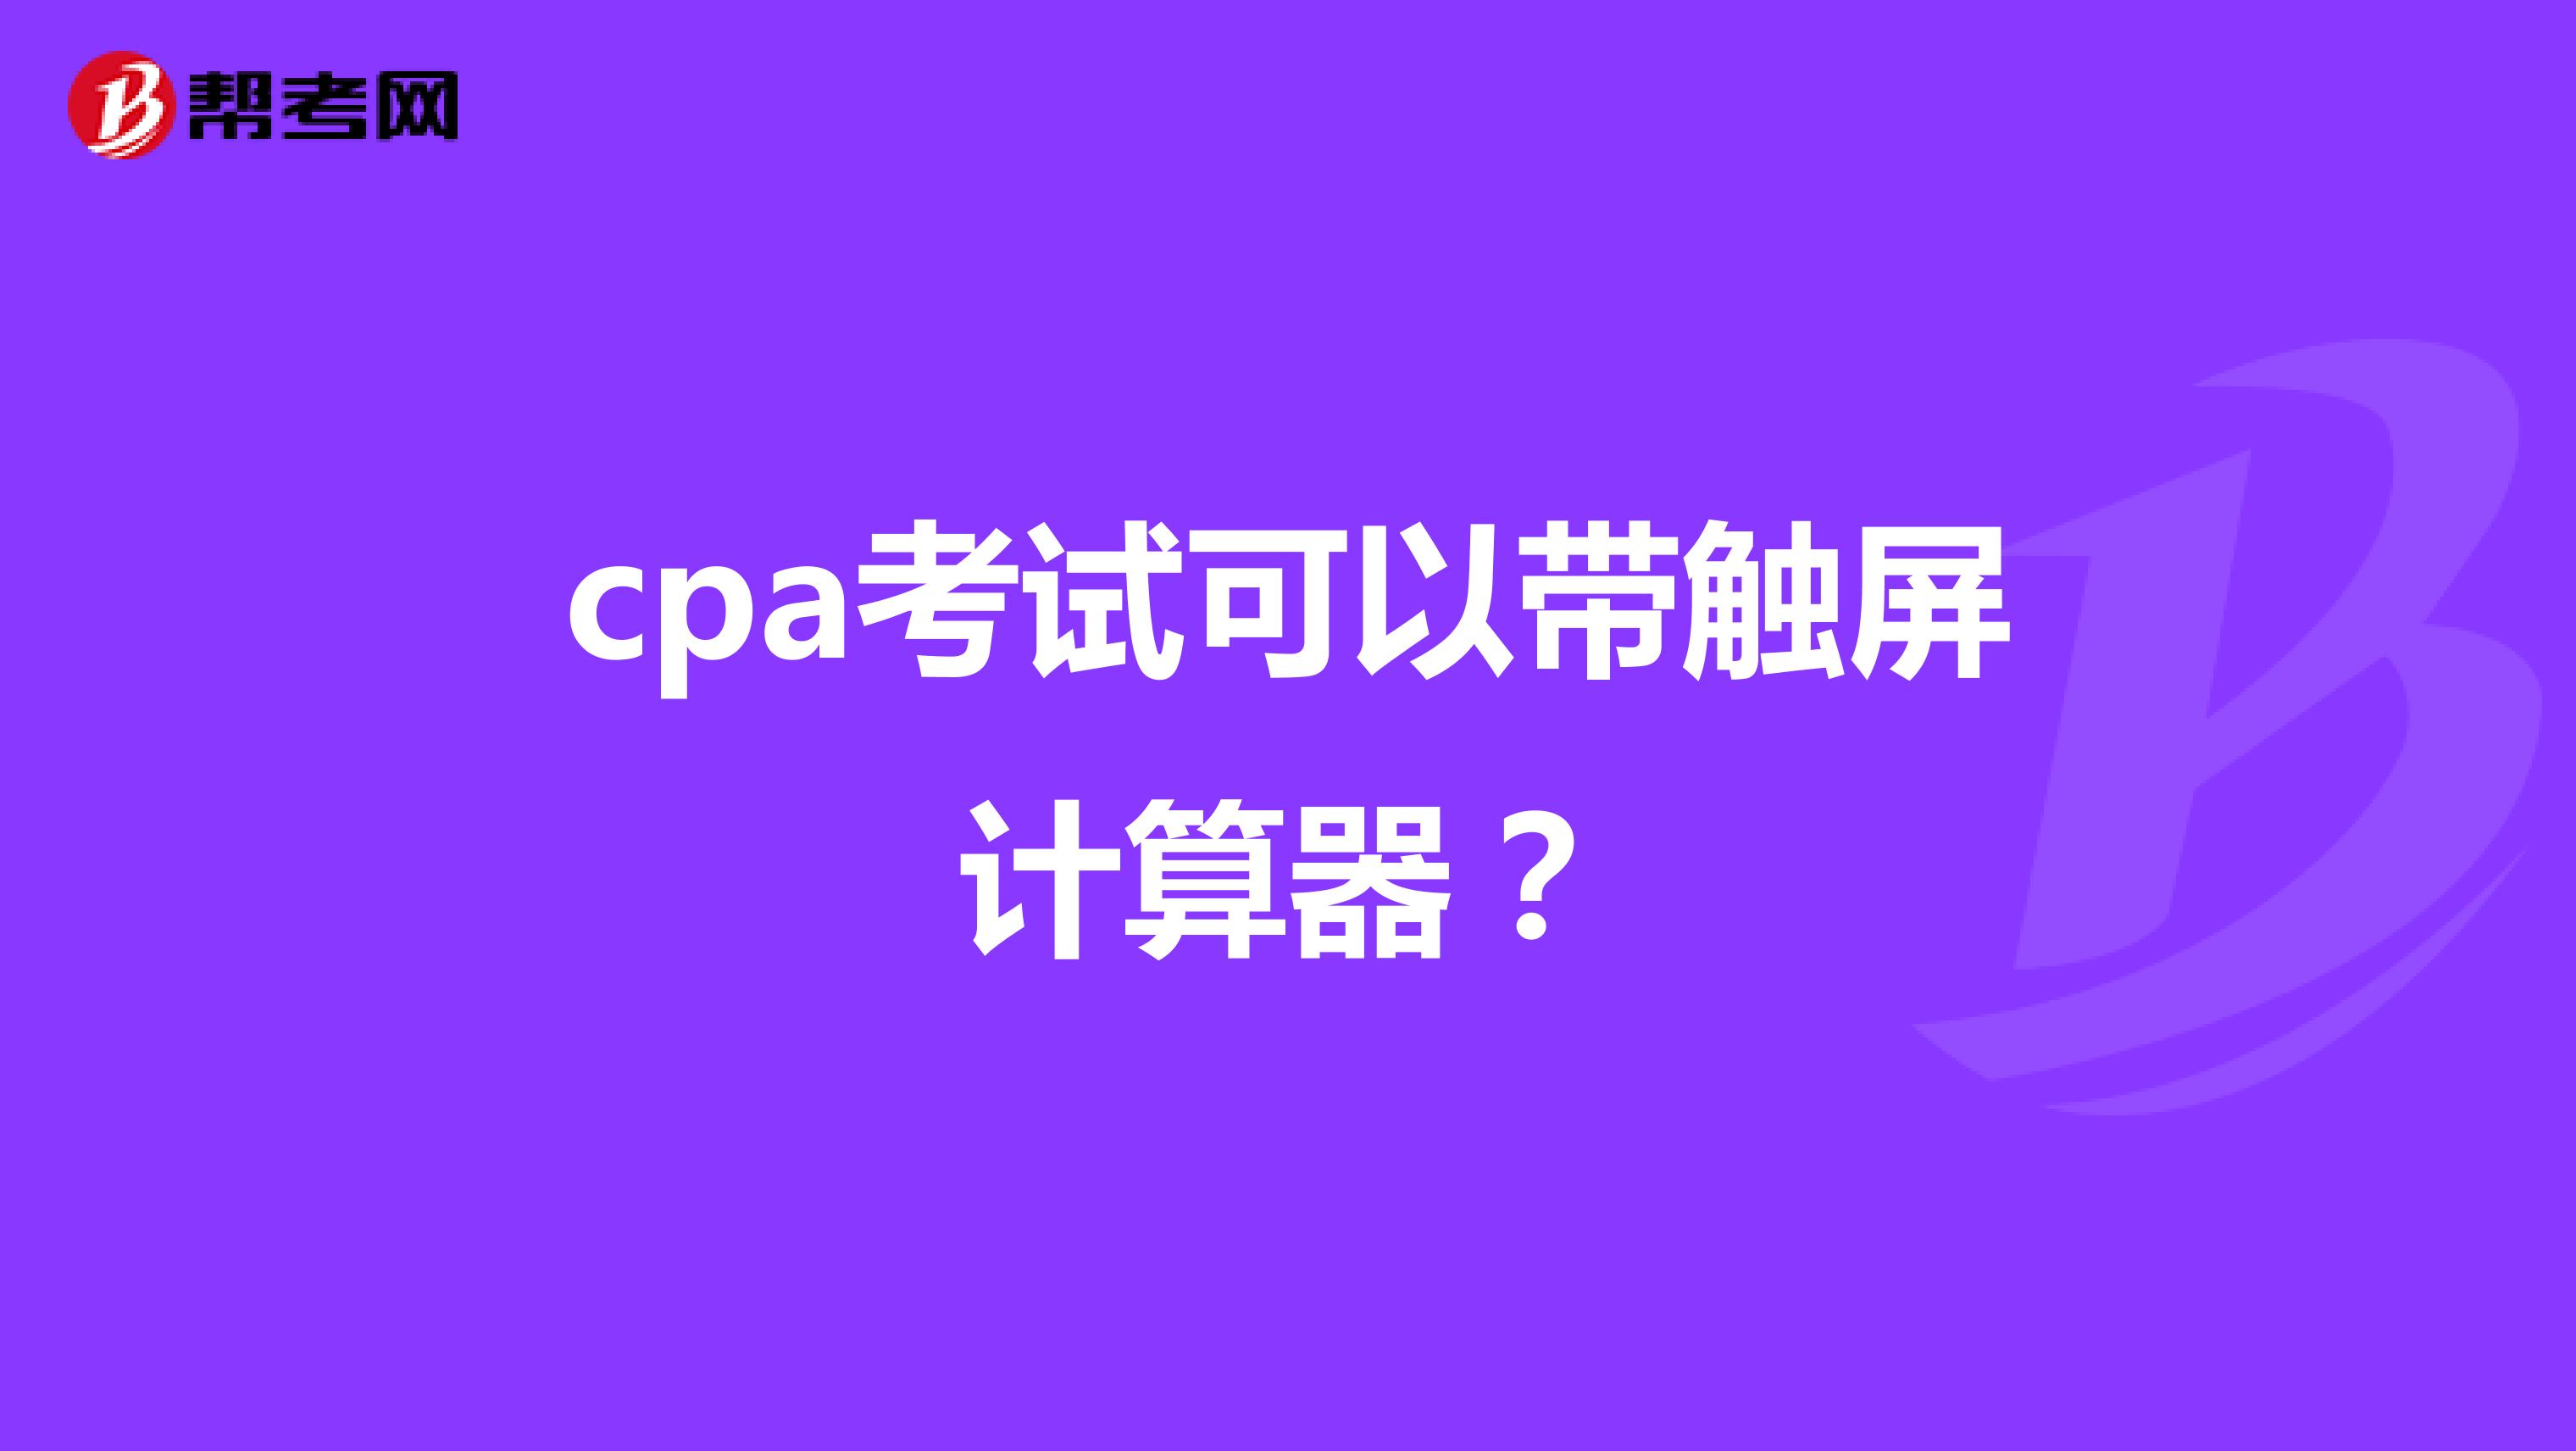 cpa考试可以带触屏计算器？